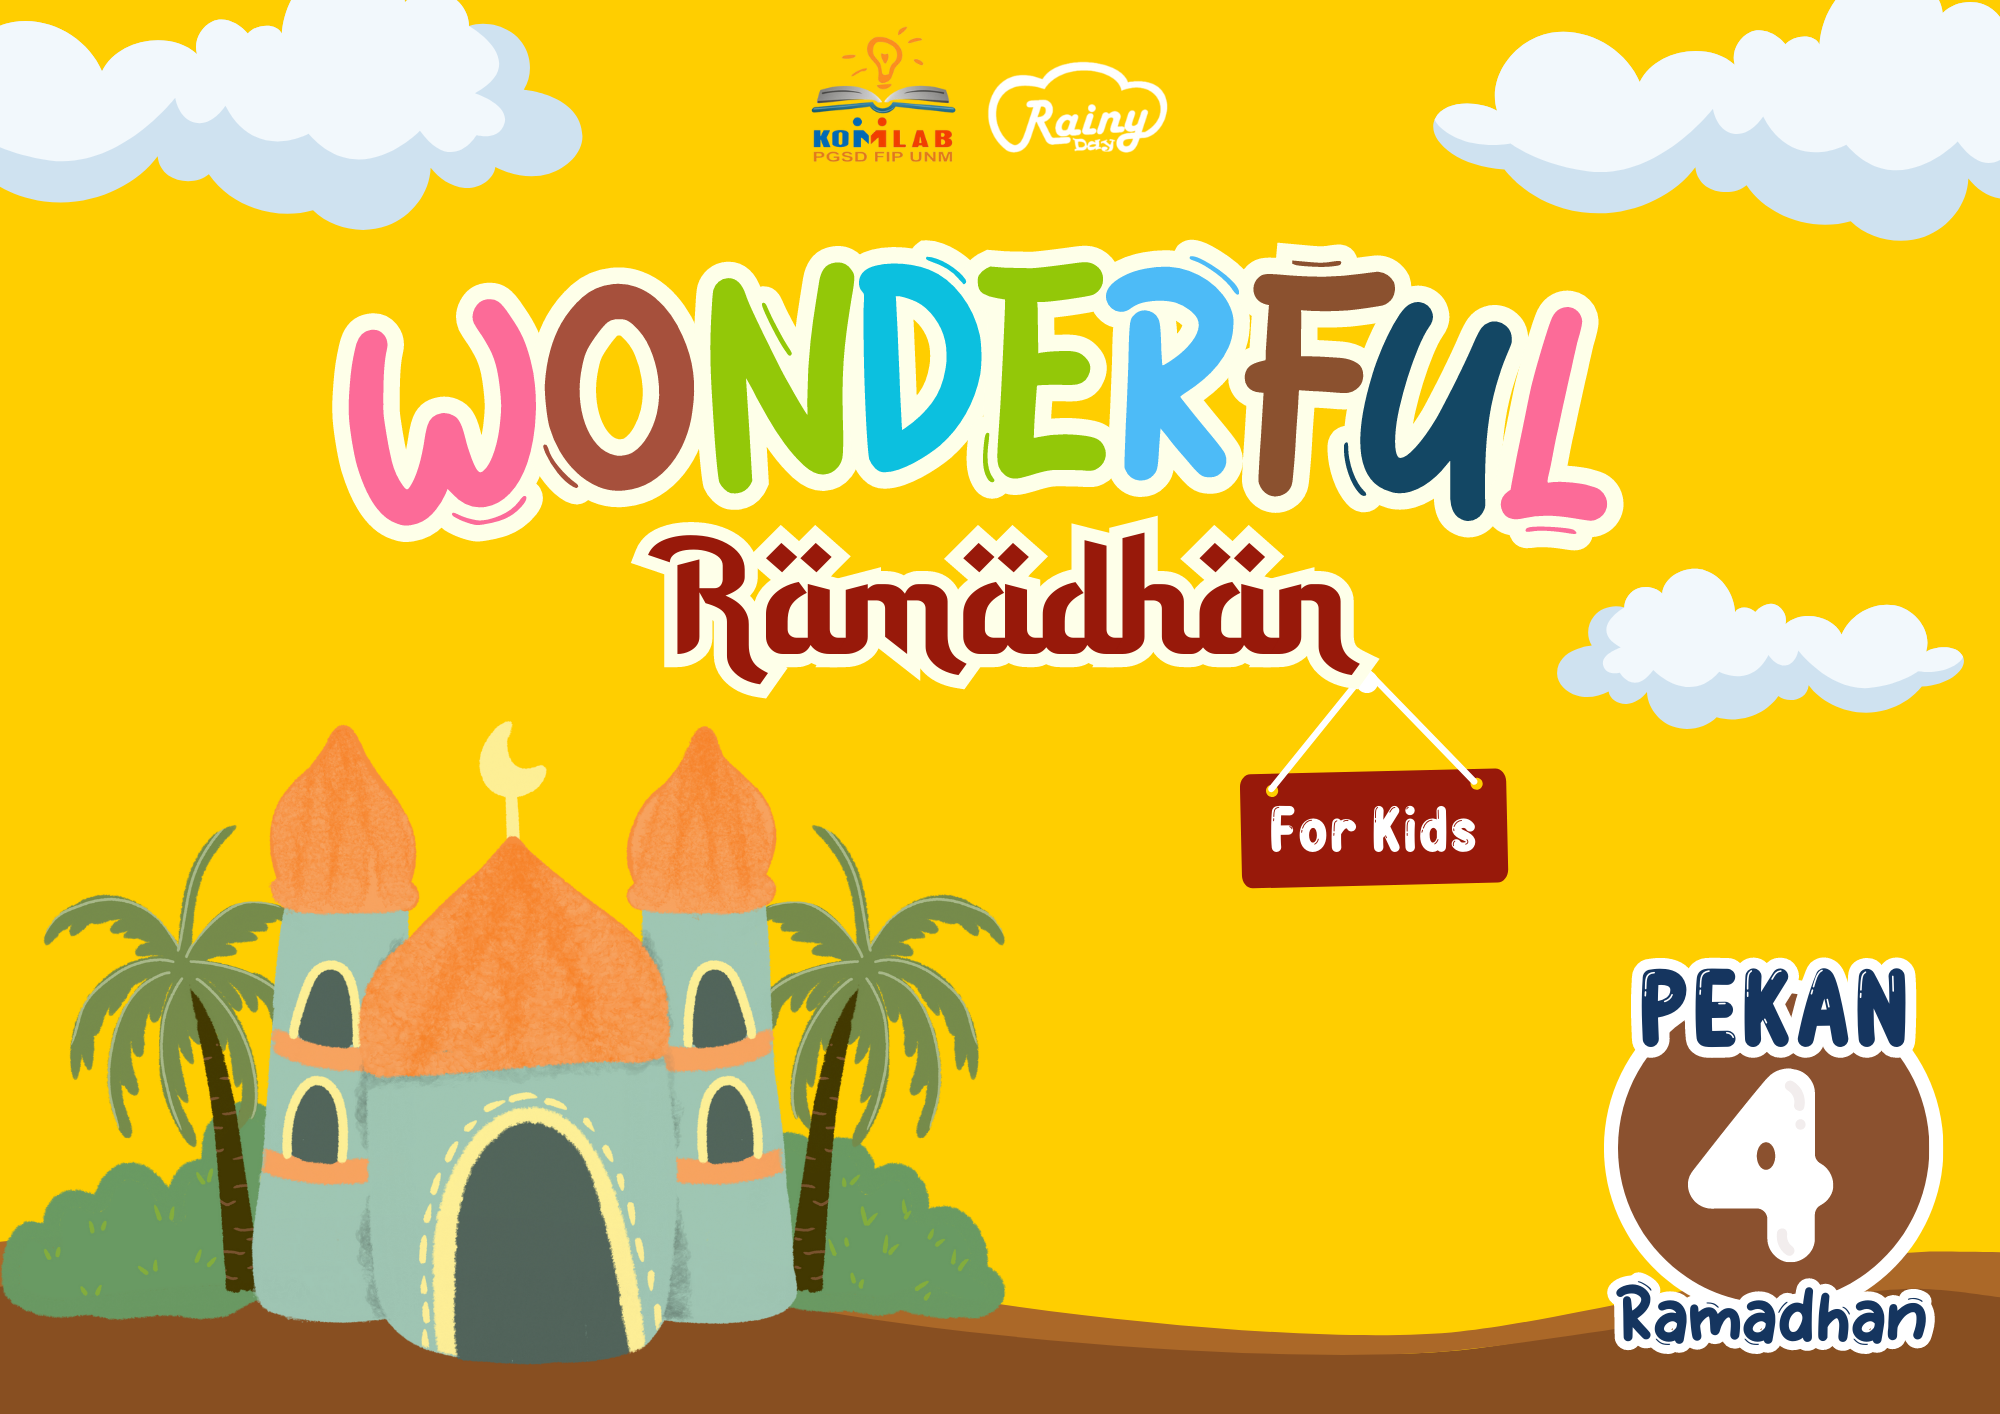 Wonderful Ramadhan 4